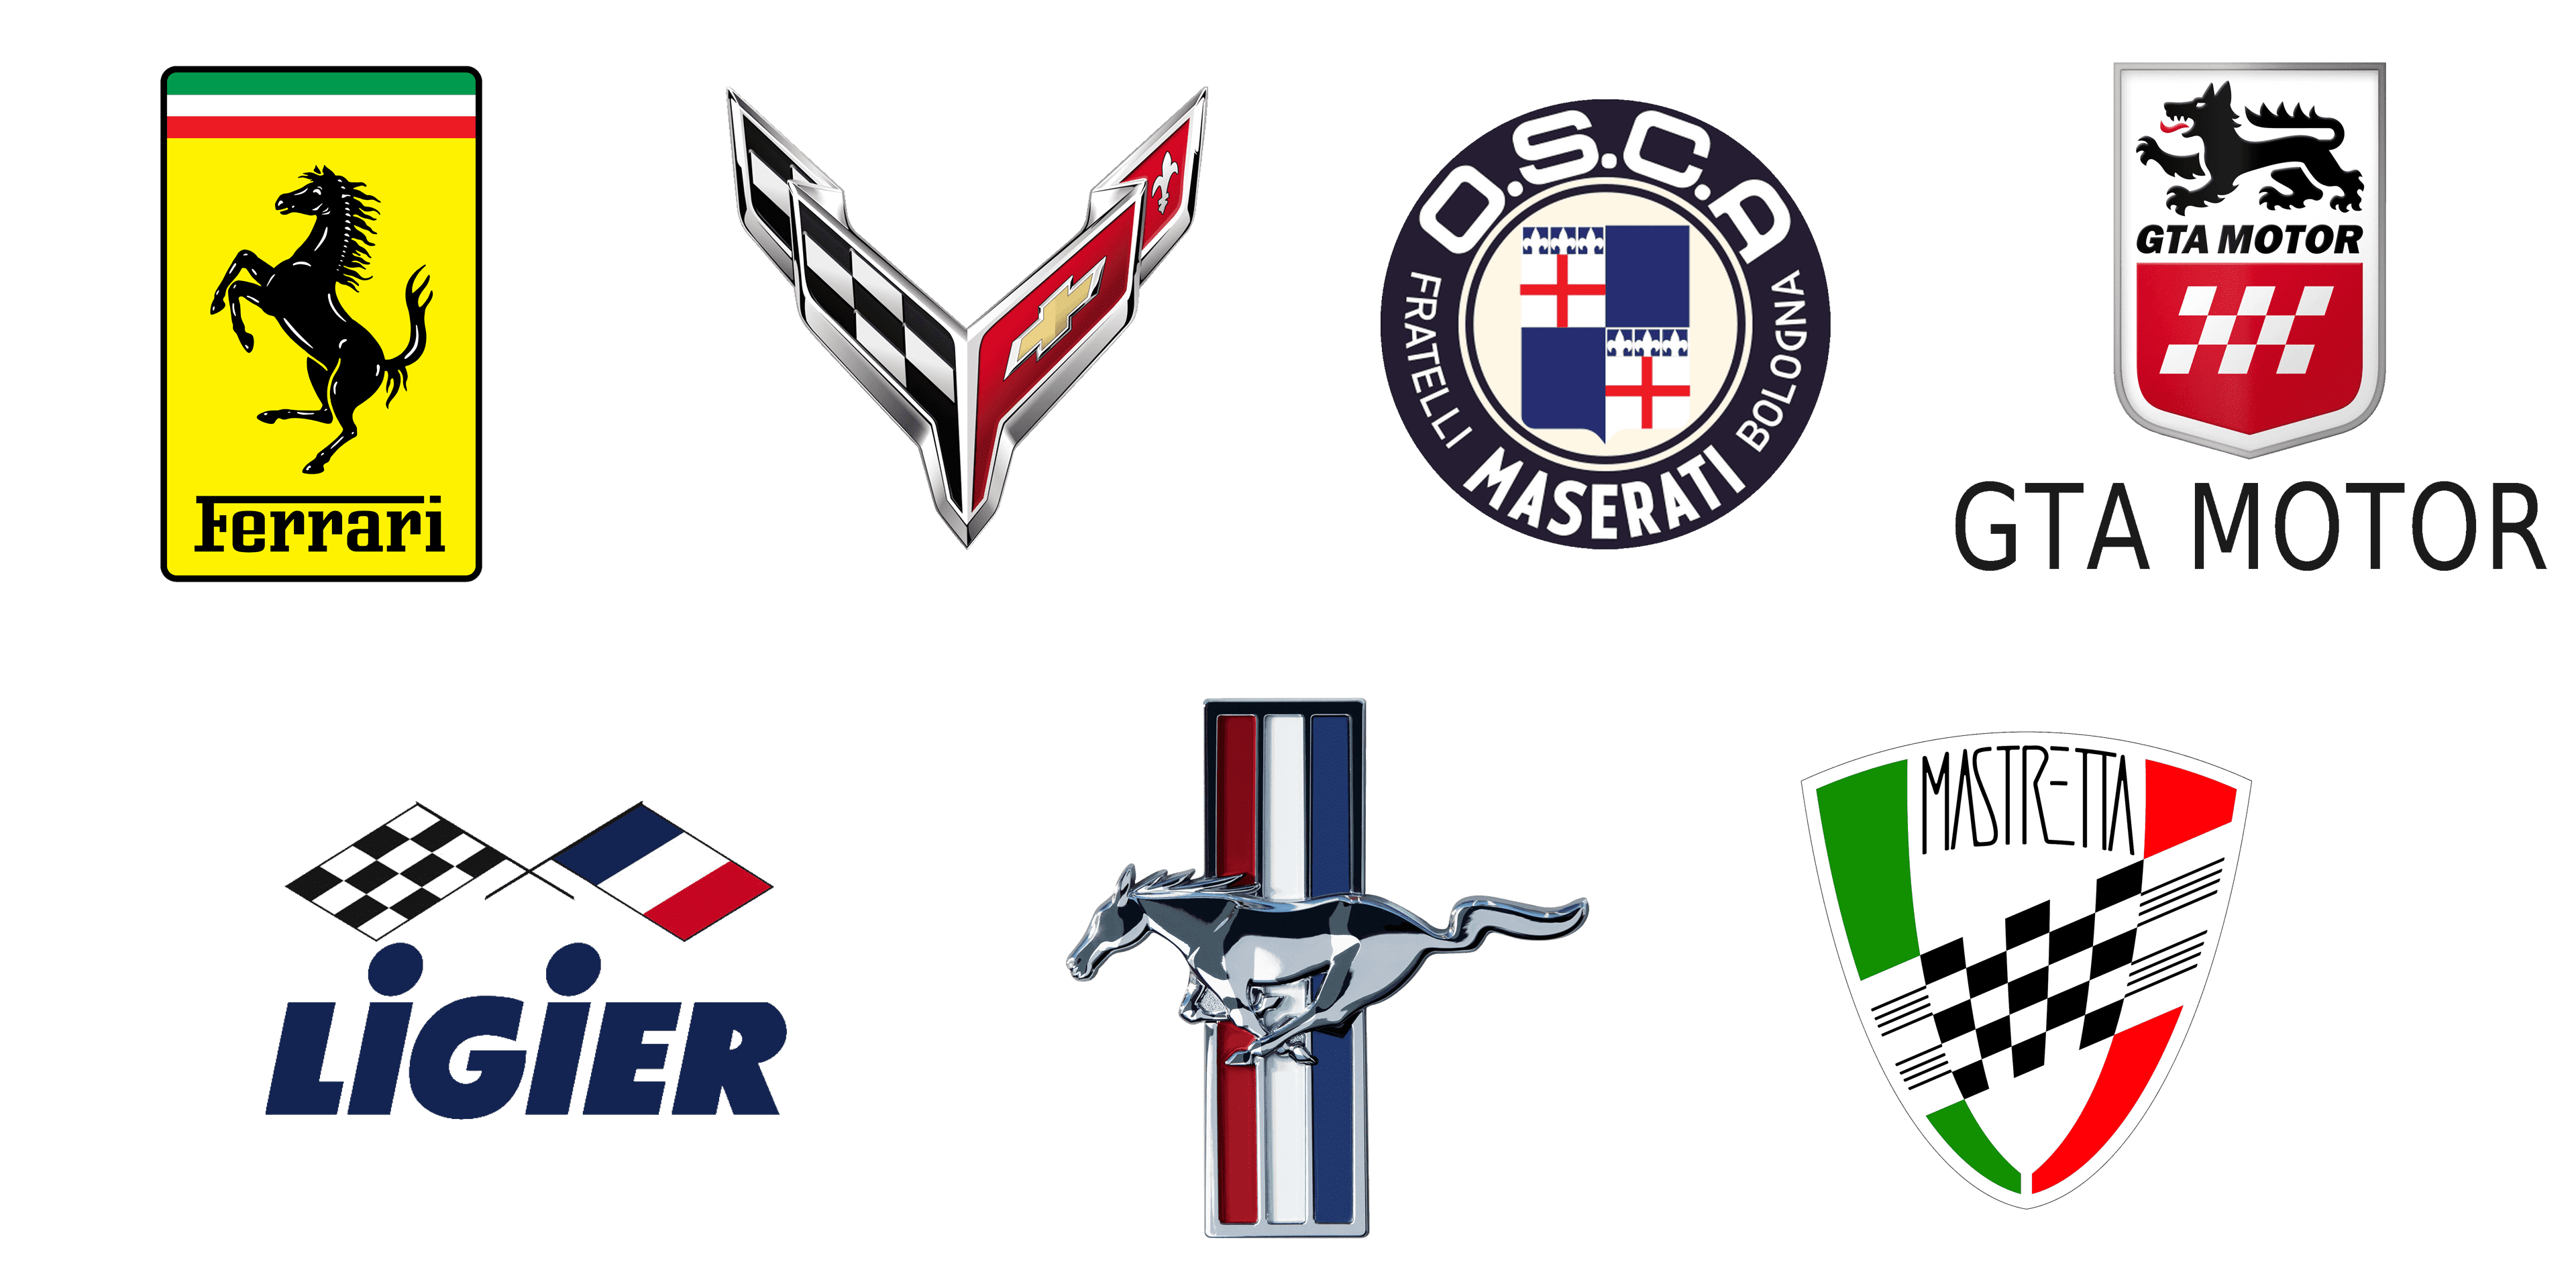 italian car logos and names